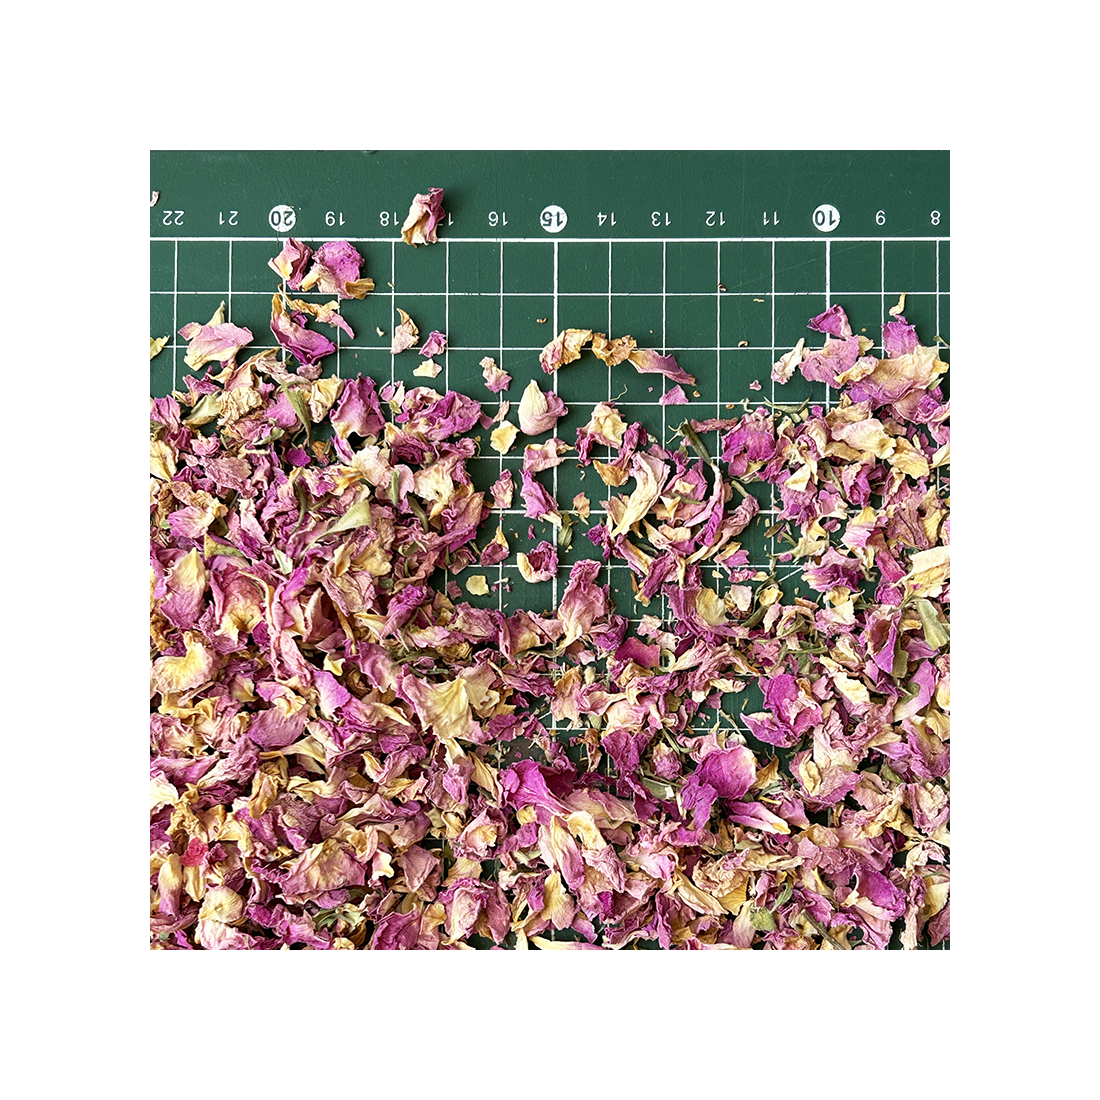 Organic Way Rose Petals Dried (Rosa Centifolia) - Pure, Edible & Fragrant for Tea | Organic & Kosher Certified | Raw, Vegan, Non GMO & Gluten Free | U